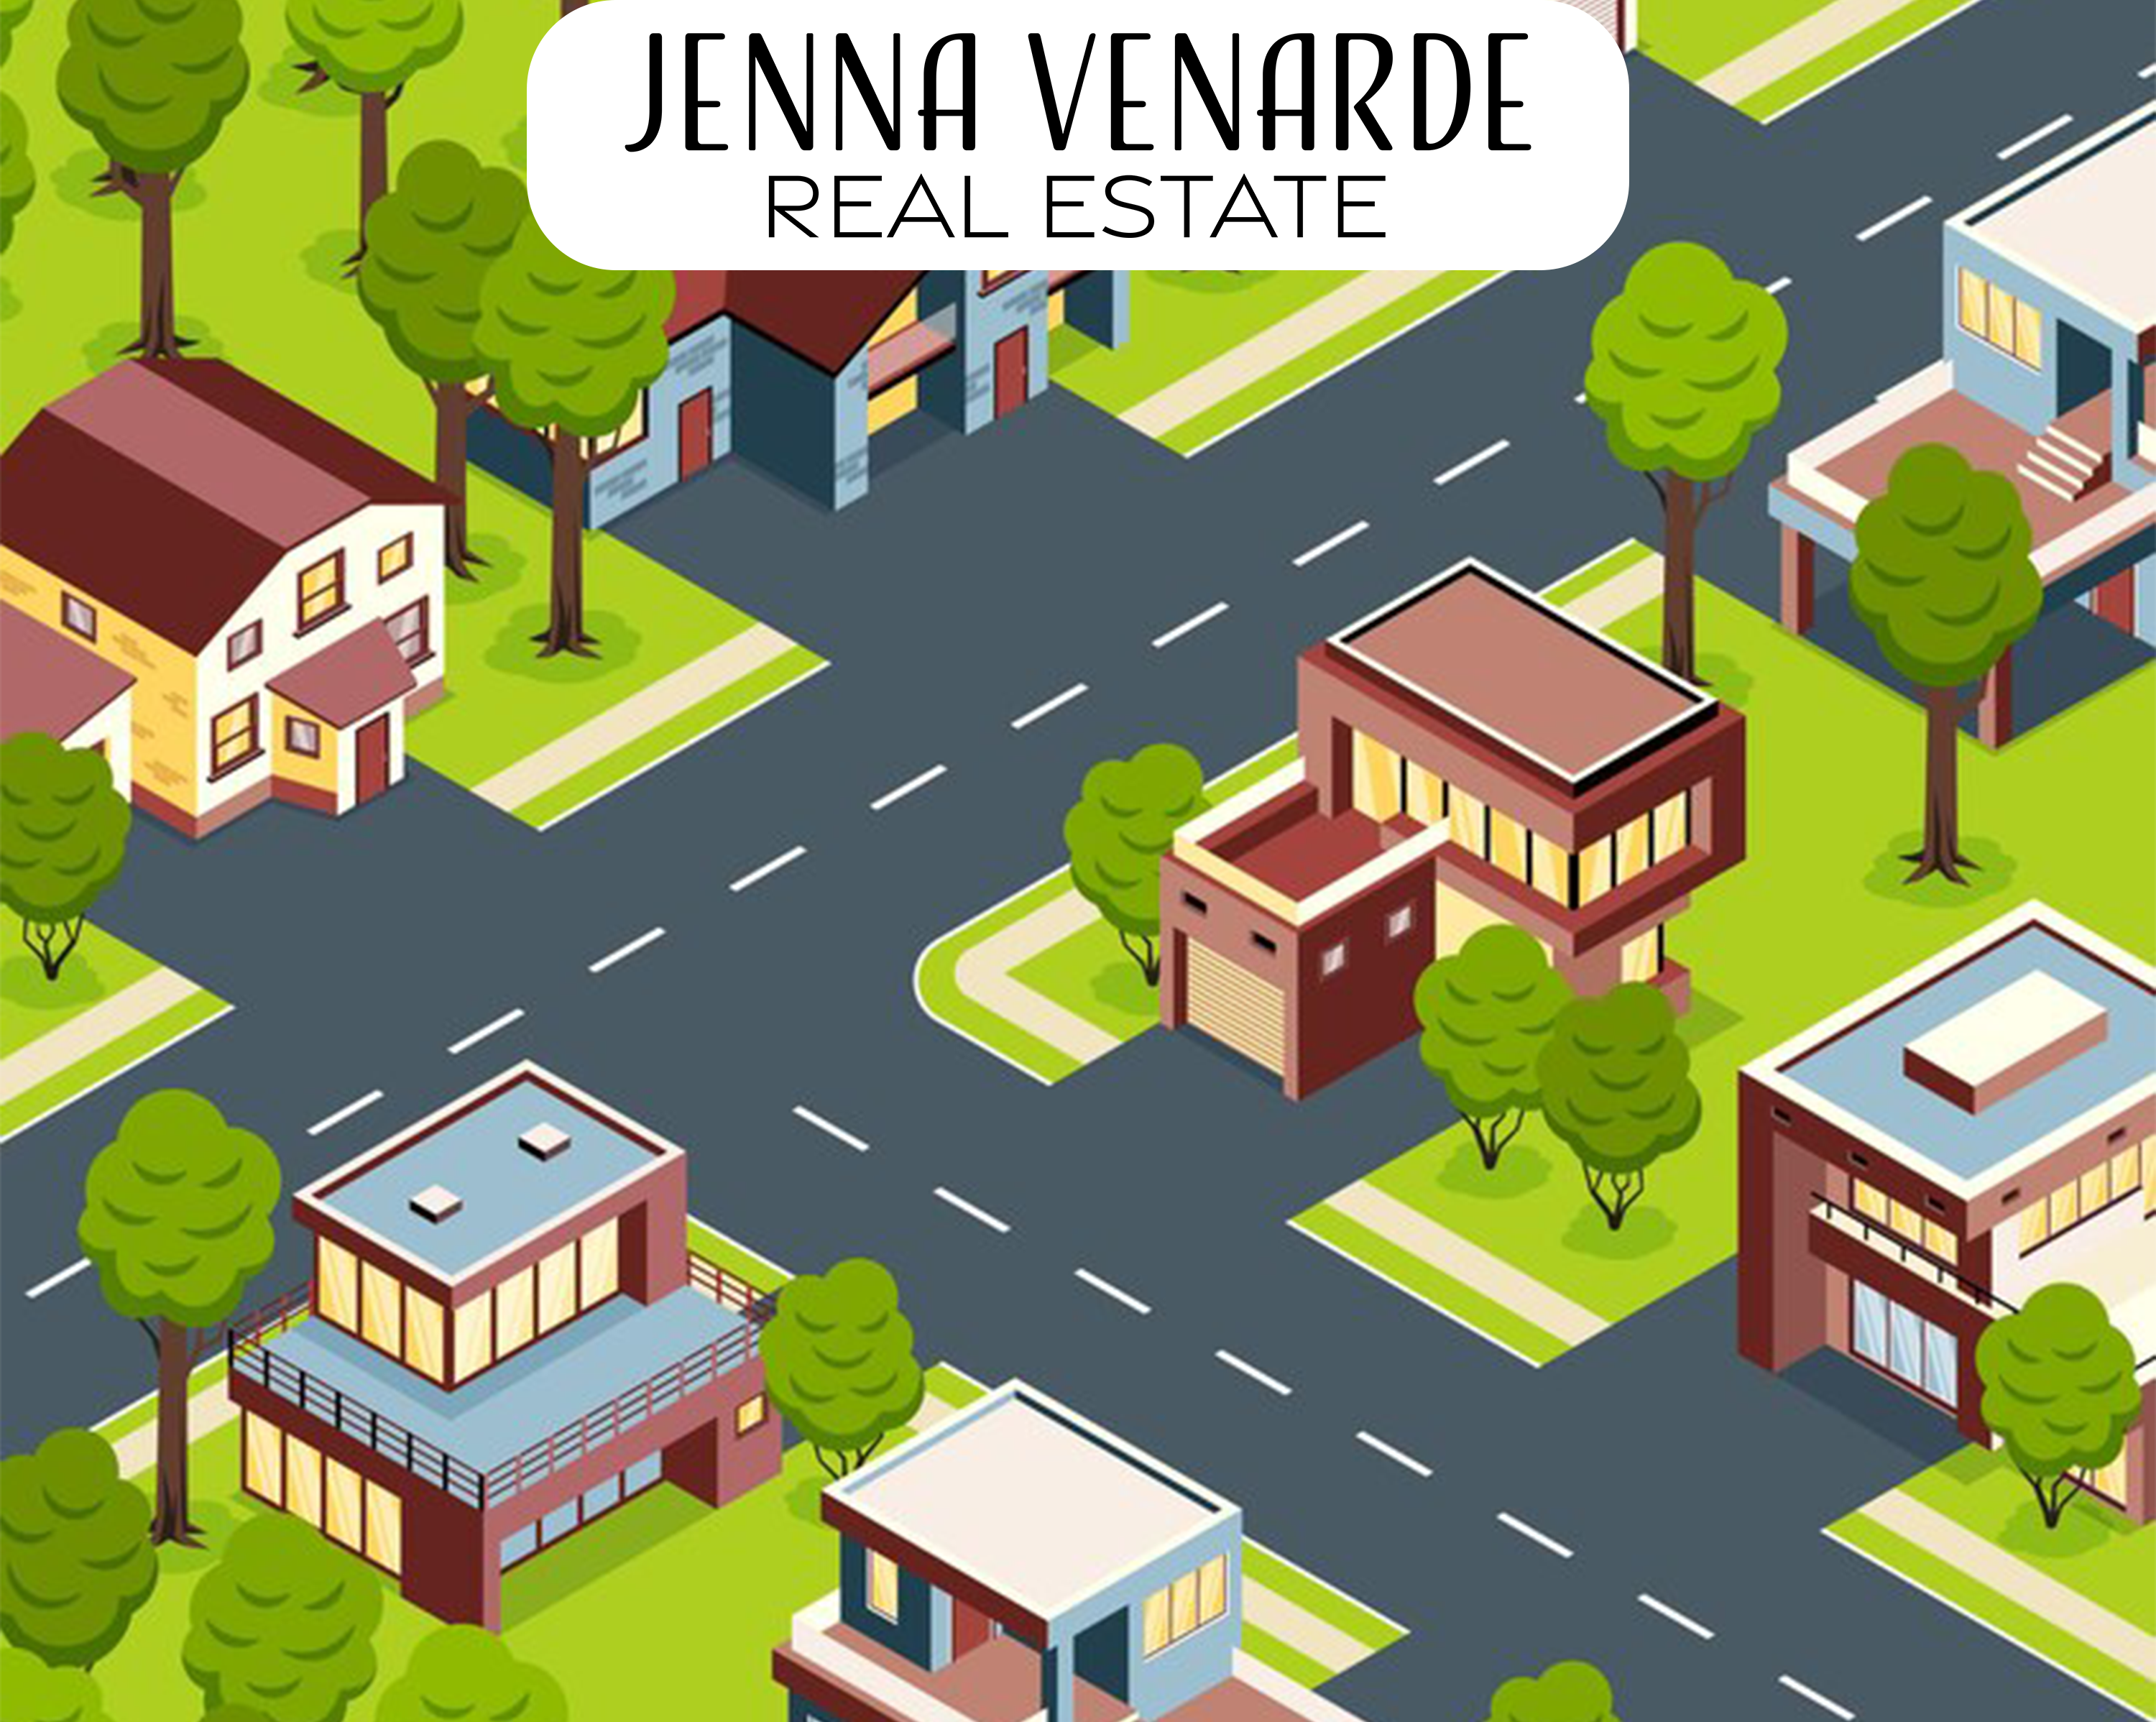 Simi Valley, CA - Jenna Venarde Real Estate